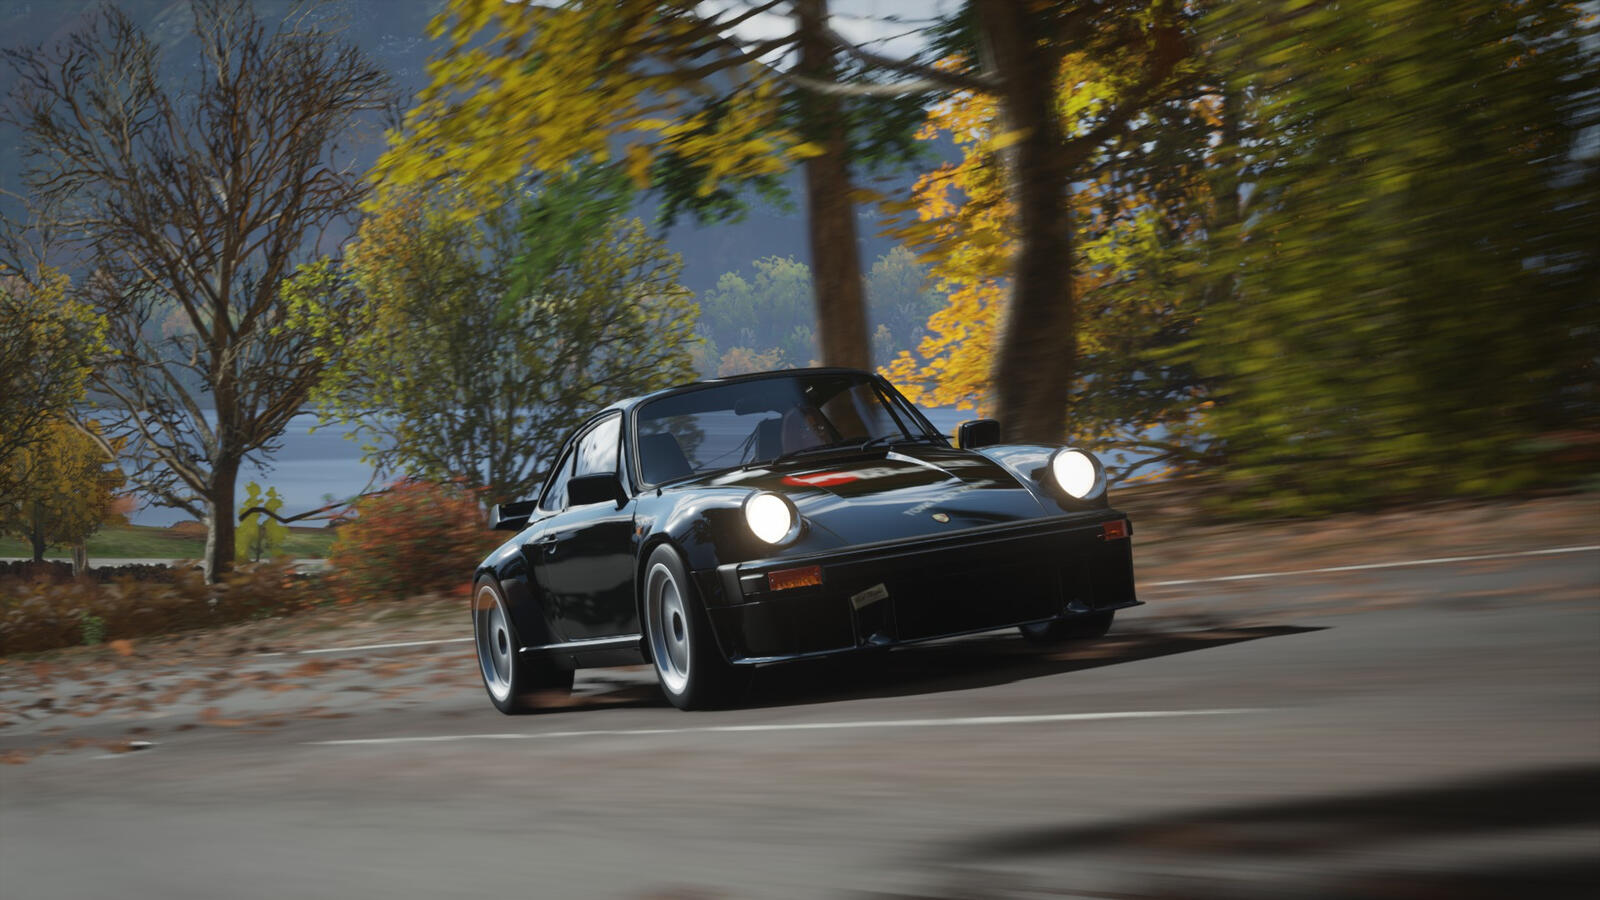 Wallpapers Porsche 911 Forza Horizon 4 wallpaper racing games on the desktop